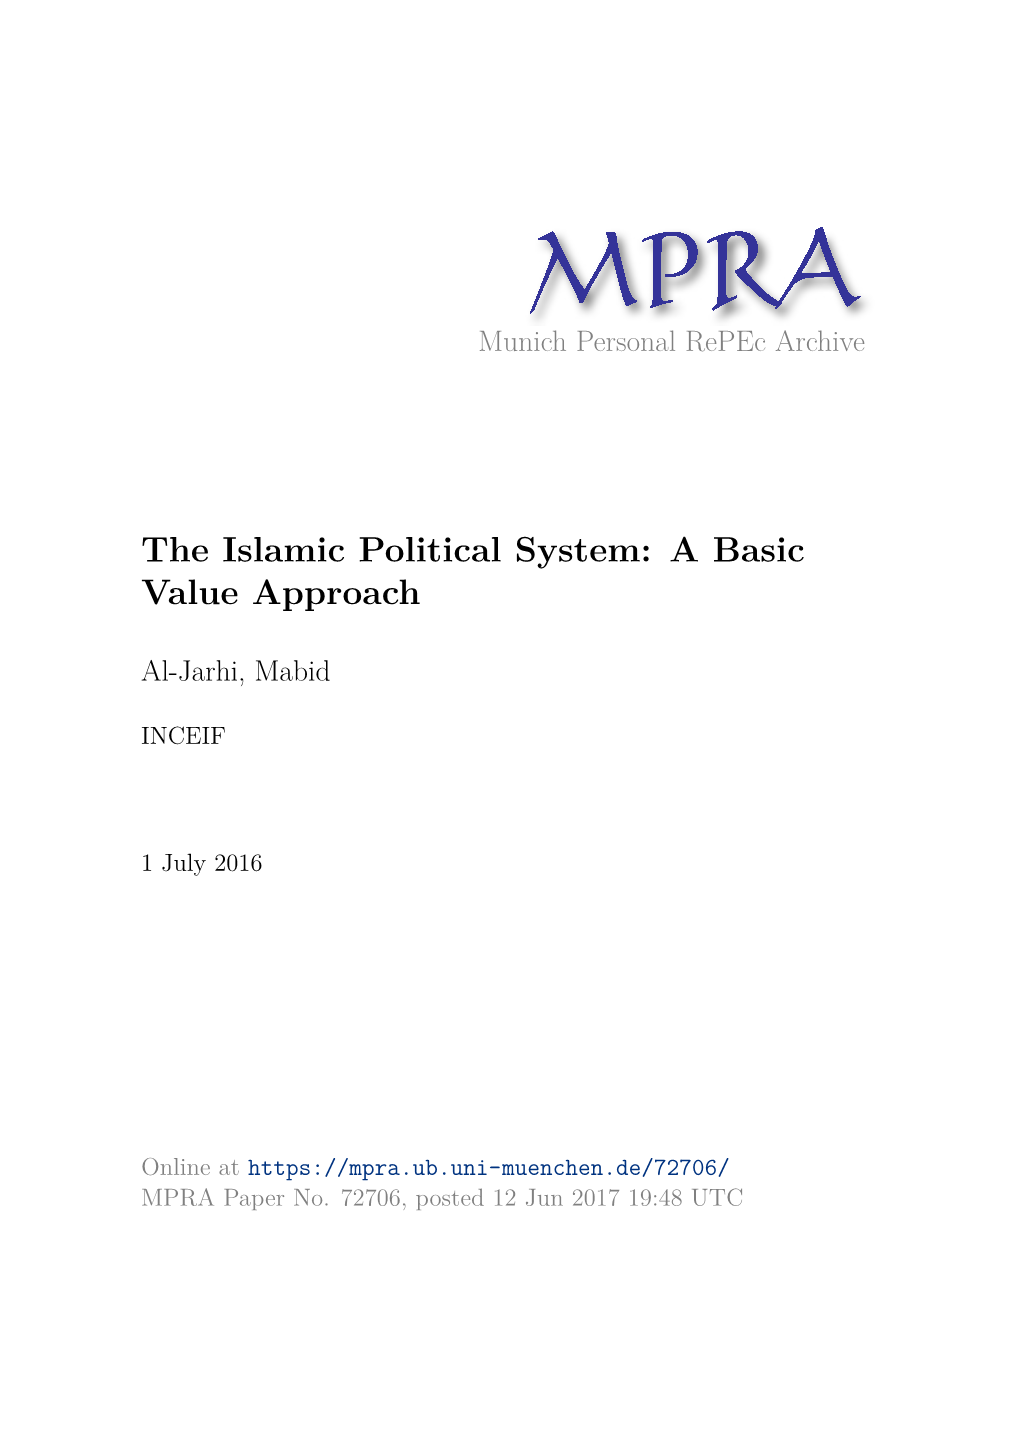 The Islamic Political System: a Basic Value Approach